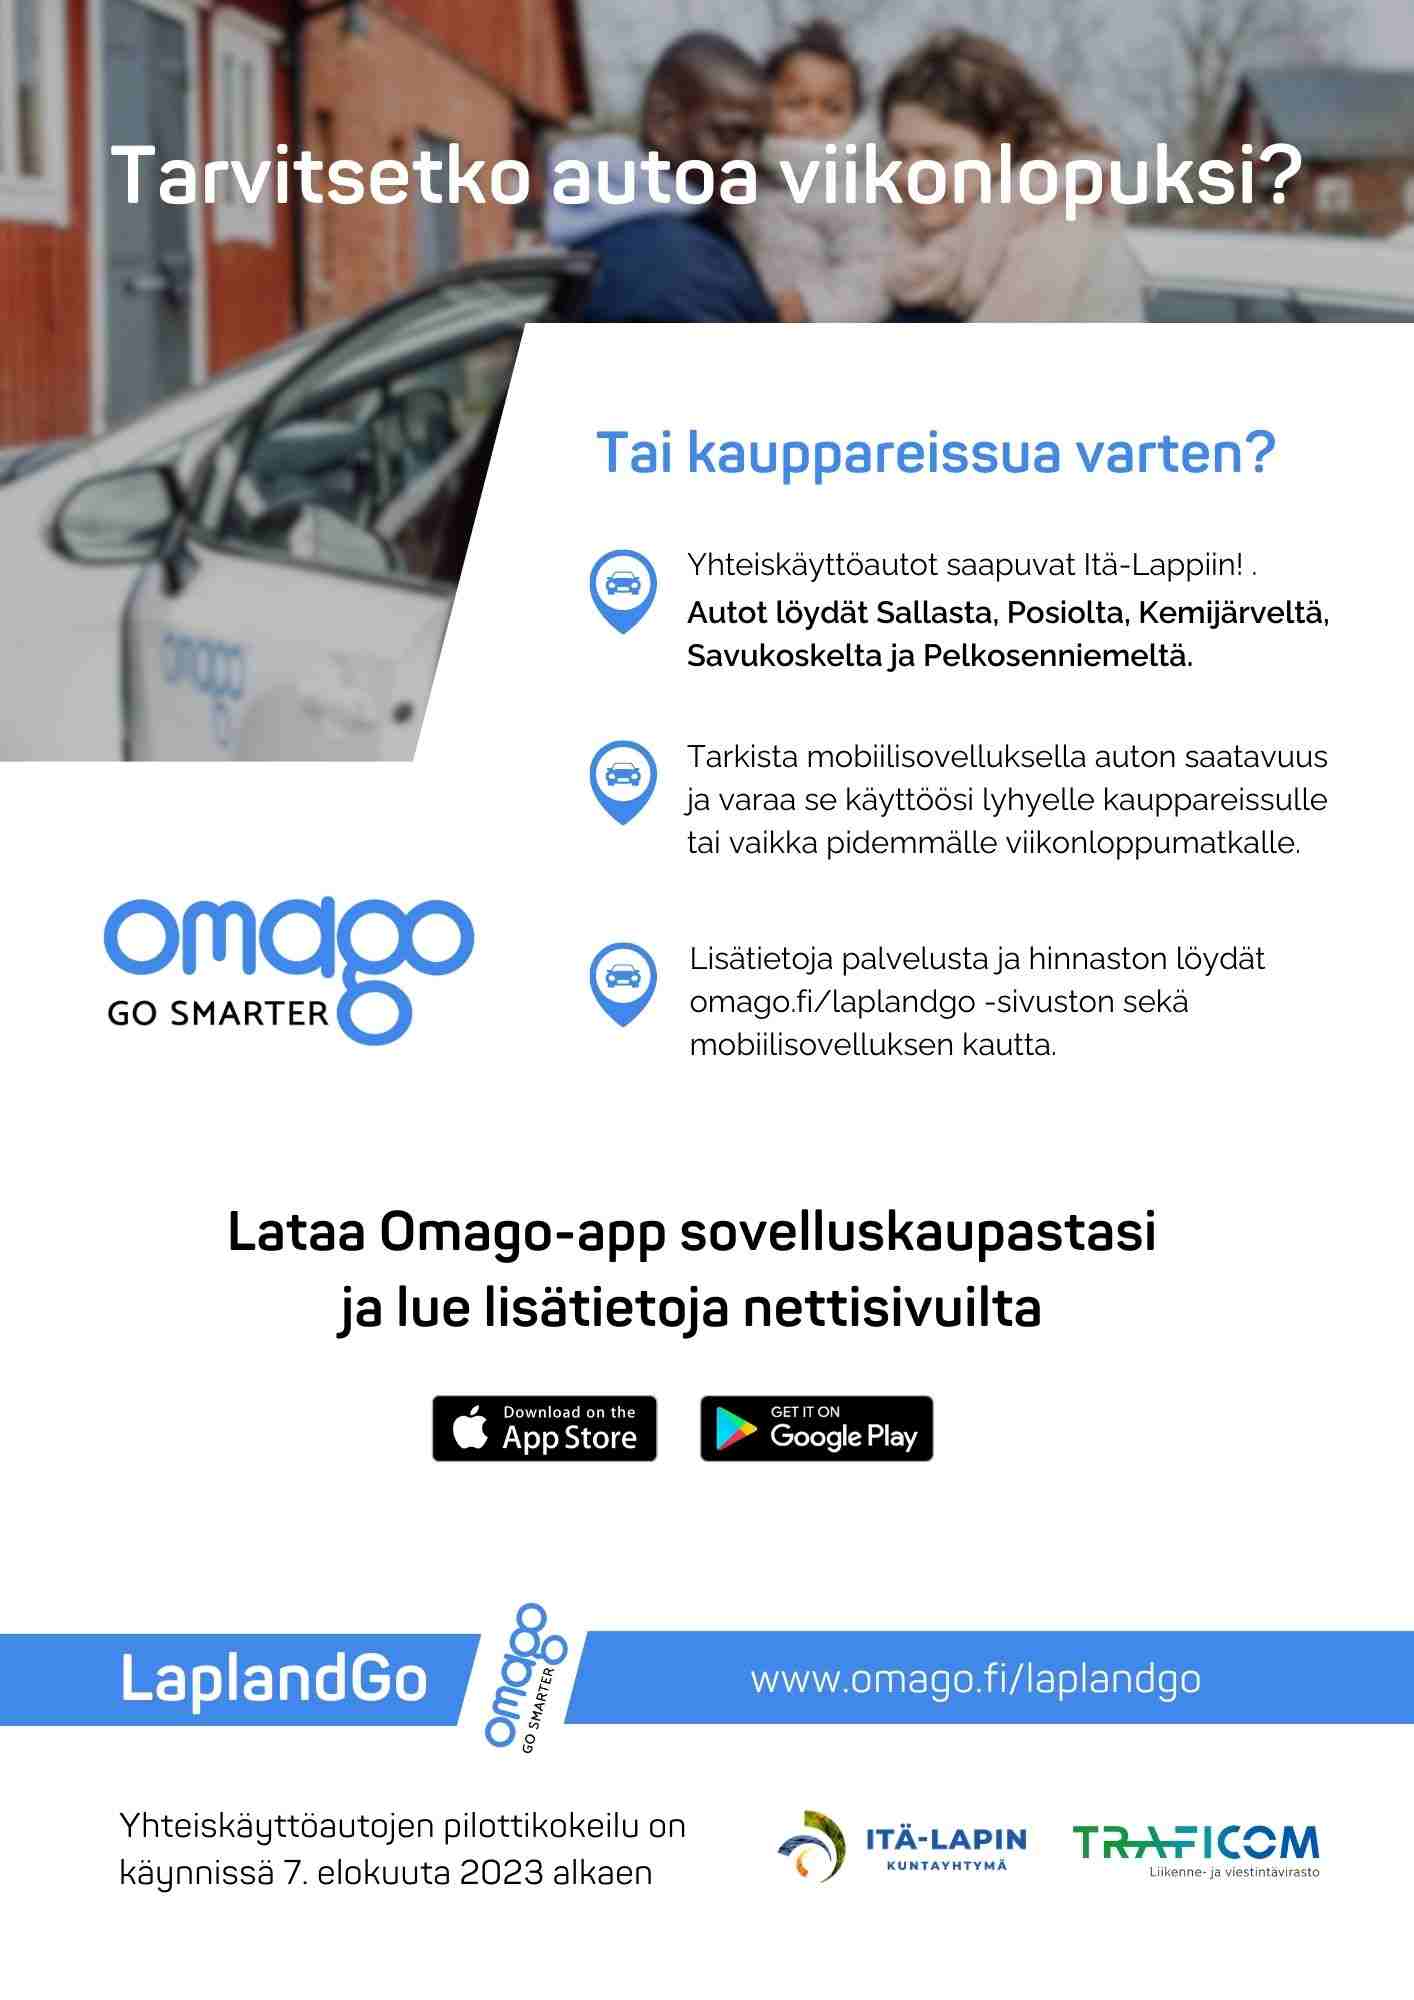 Poster A4 - LaplandGo - Suomeksi.jpg